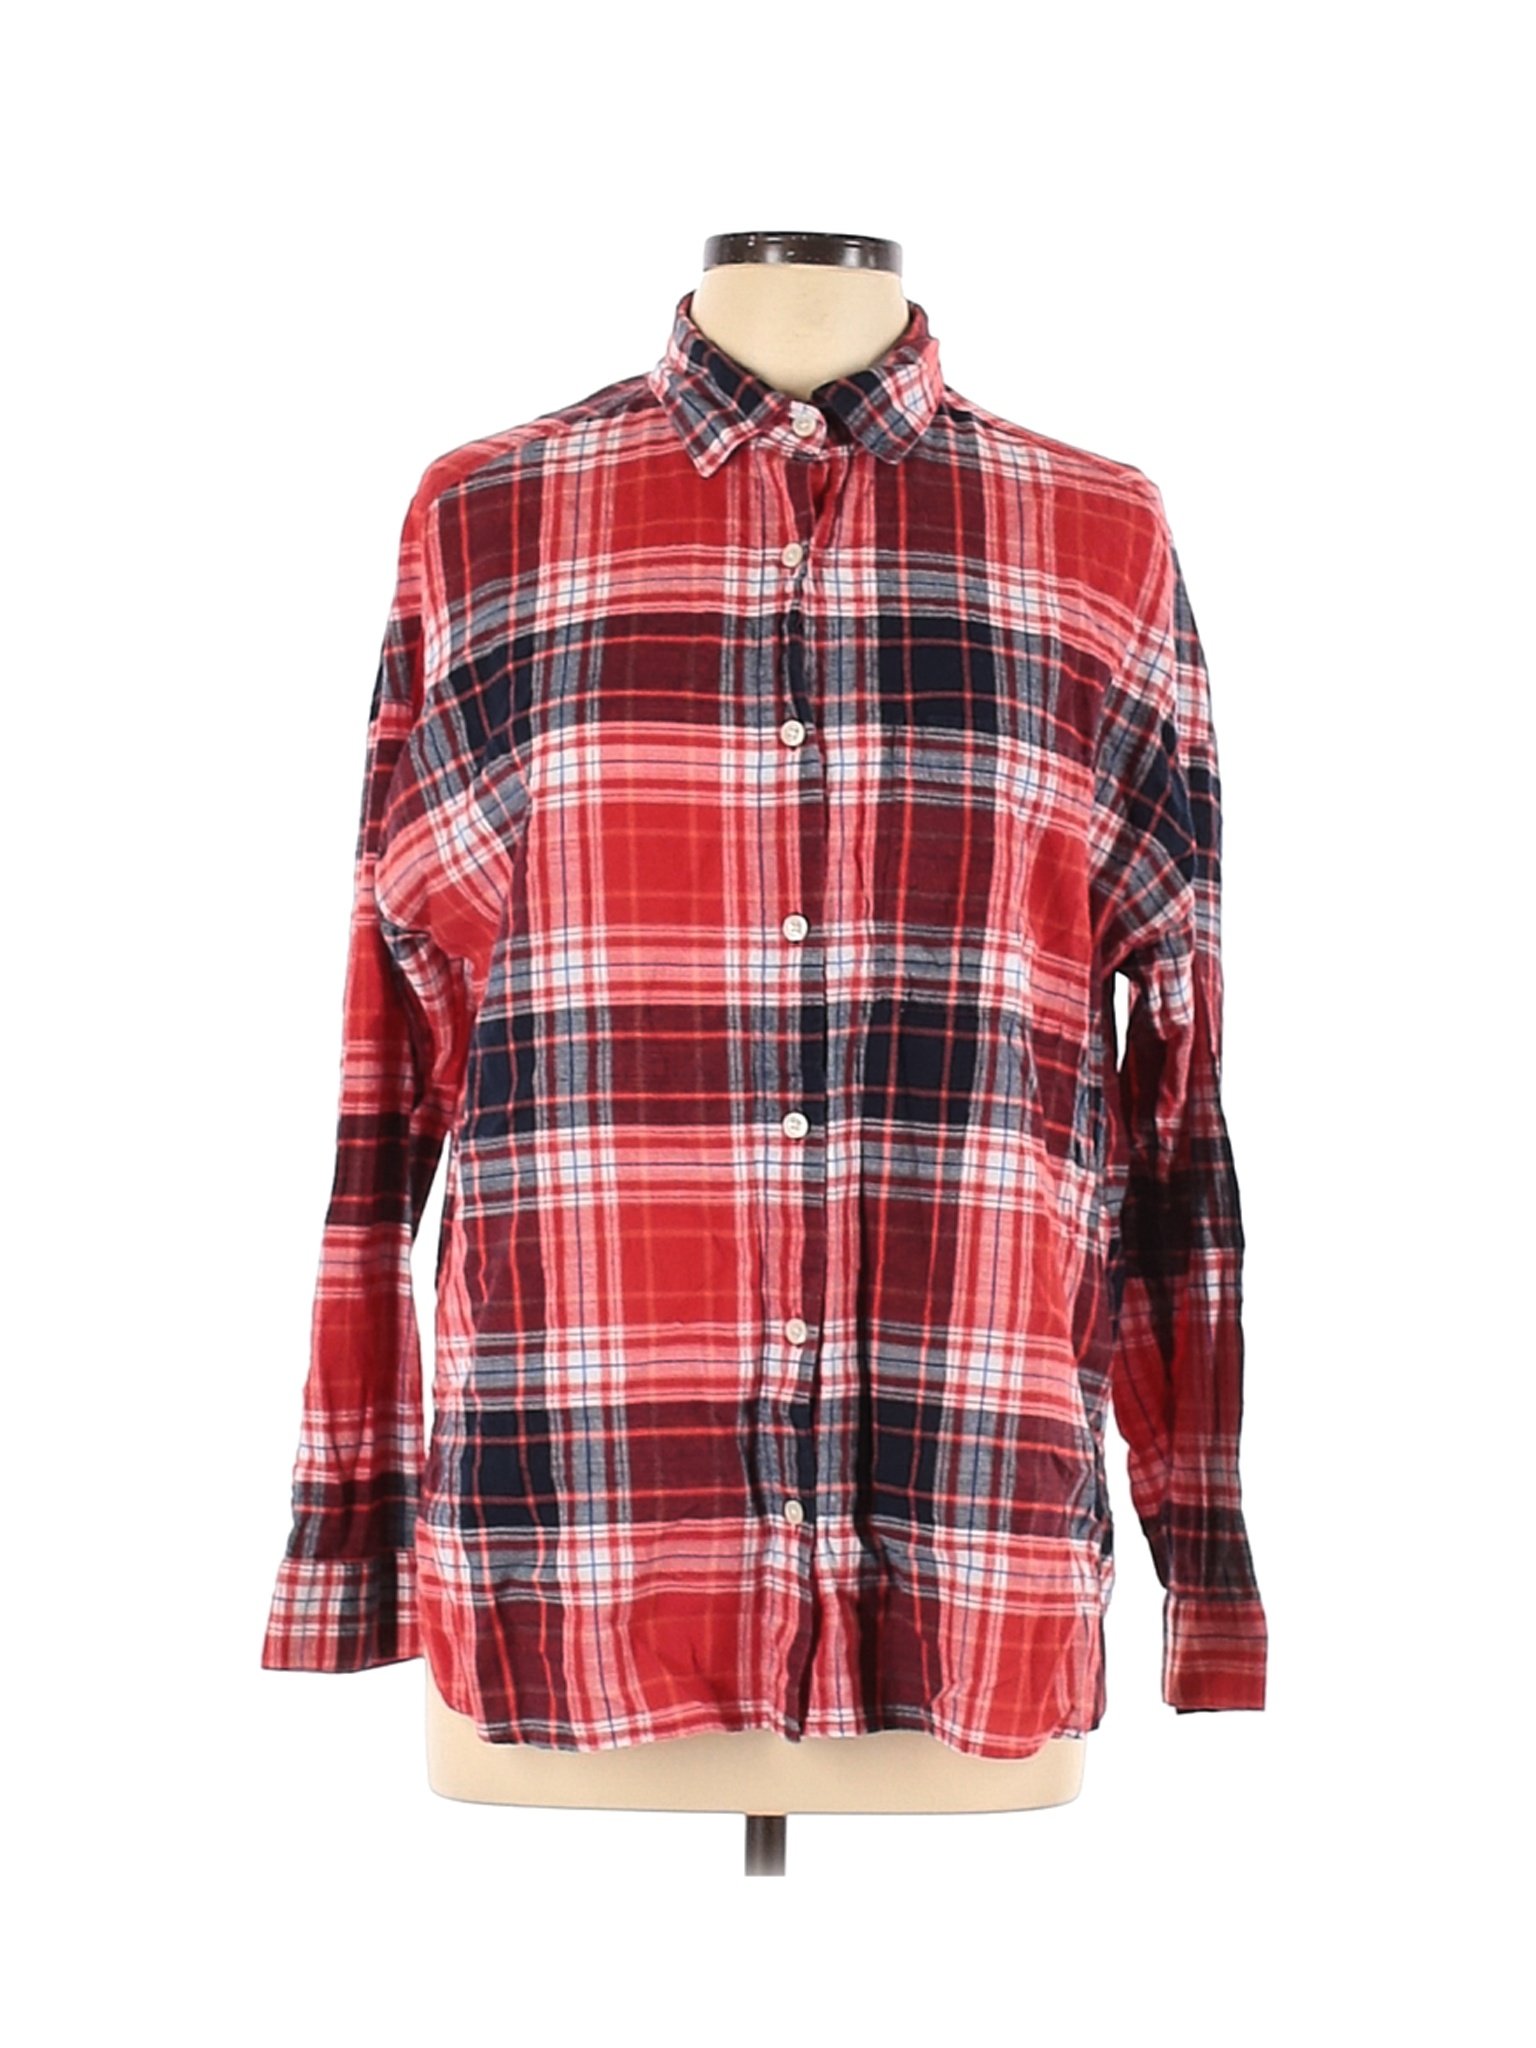 Old Navy Women Red Long Sleeve Button-Down Shirt L | eBay